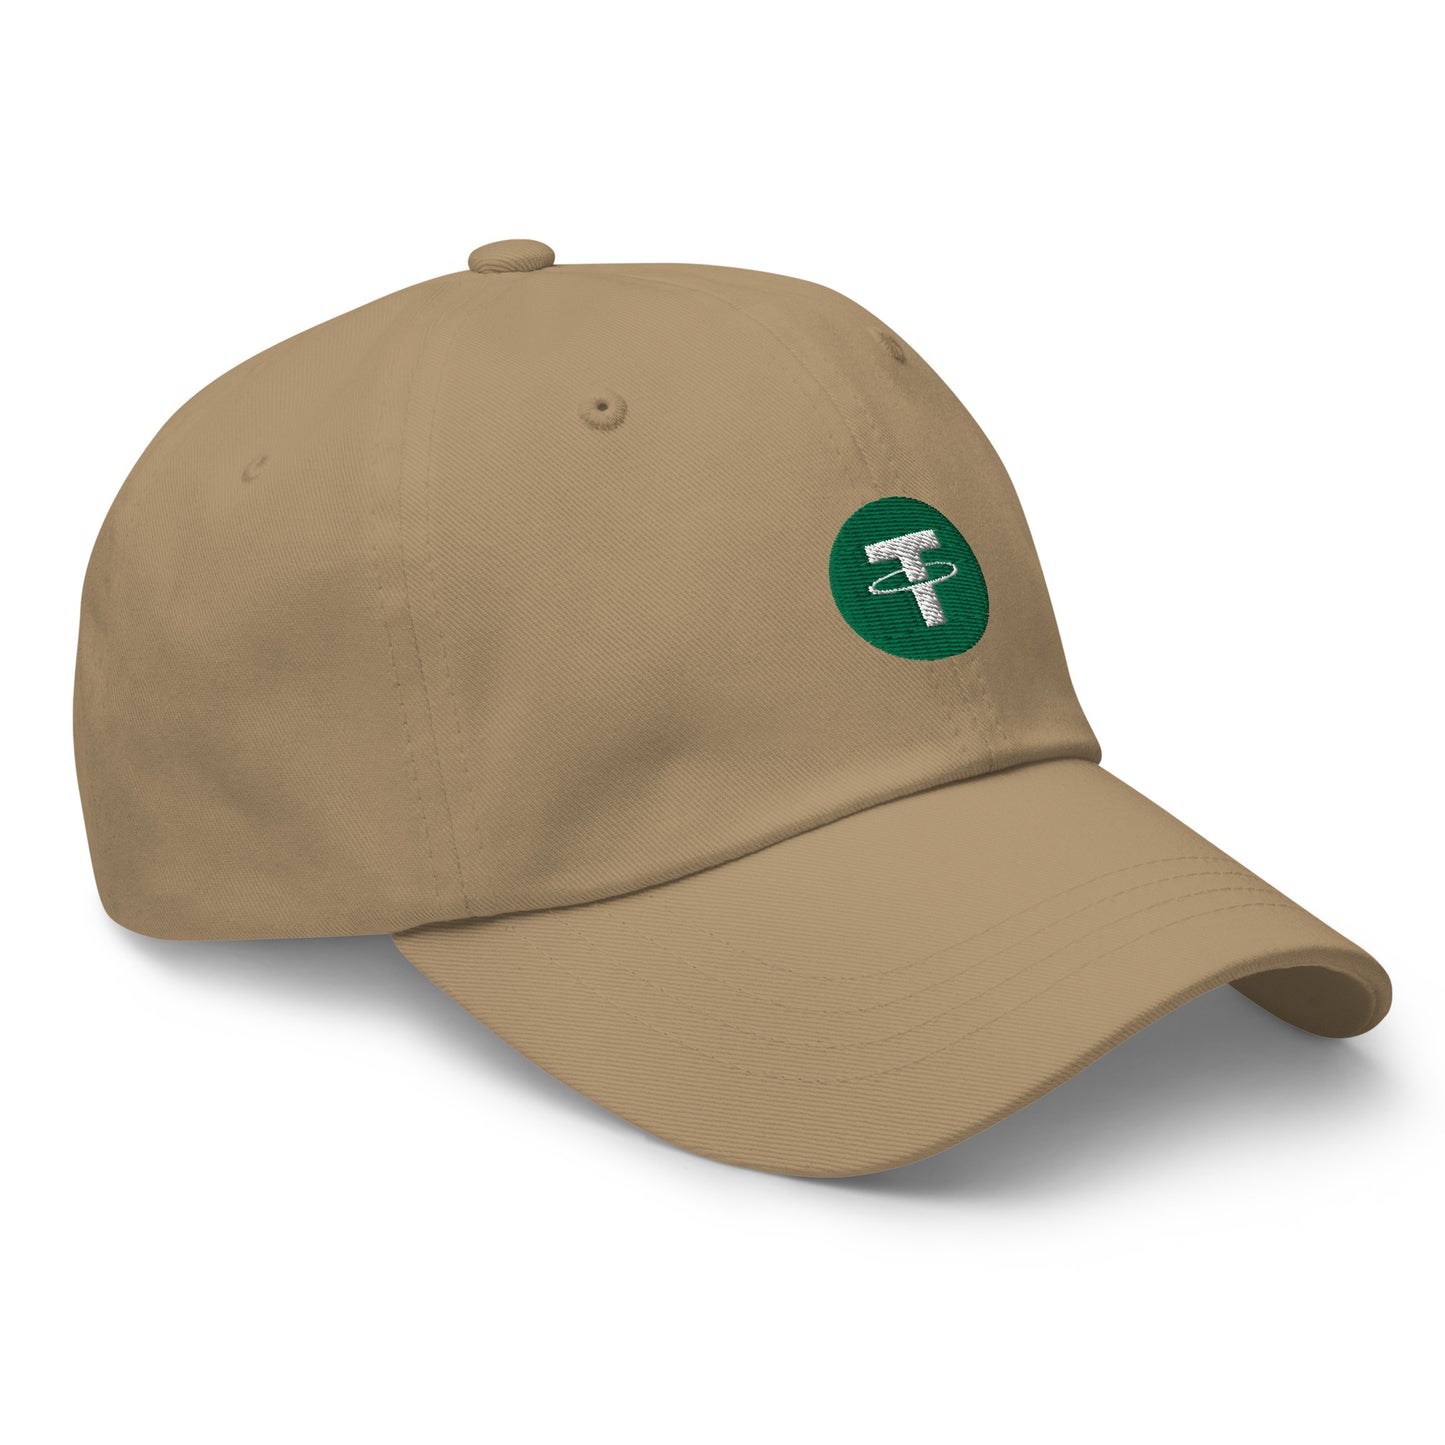 Tether (USDT) - Fitted baseball cap